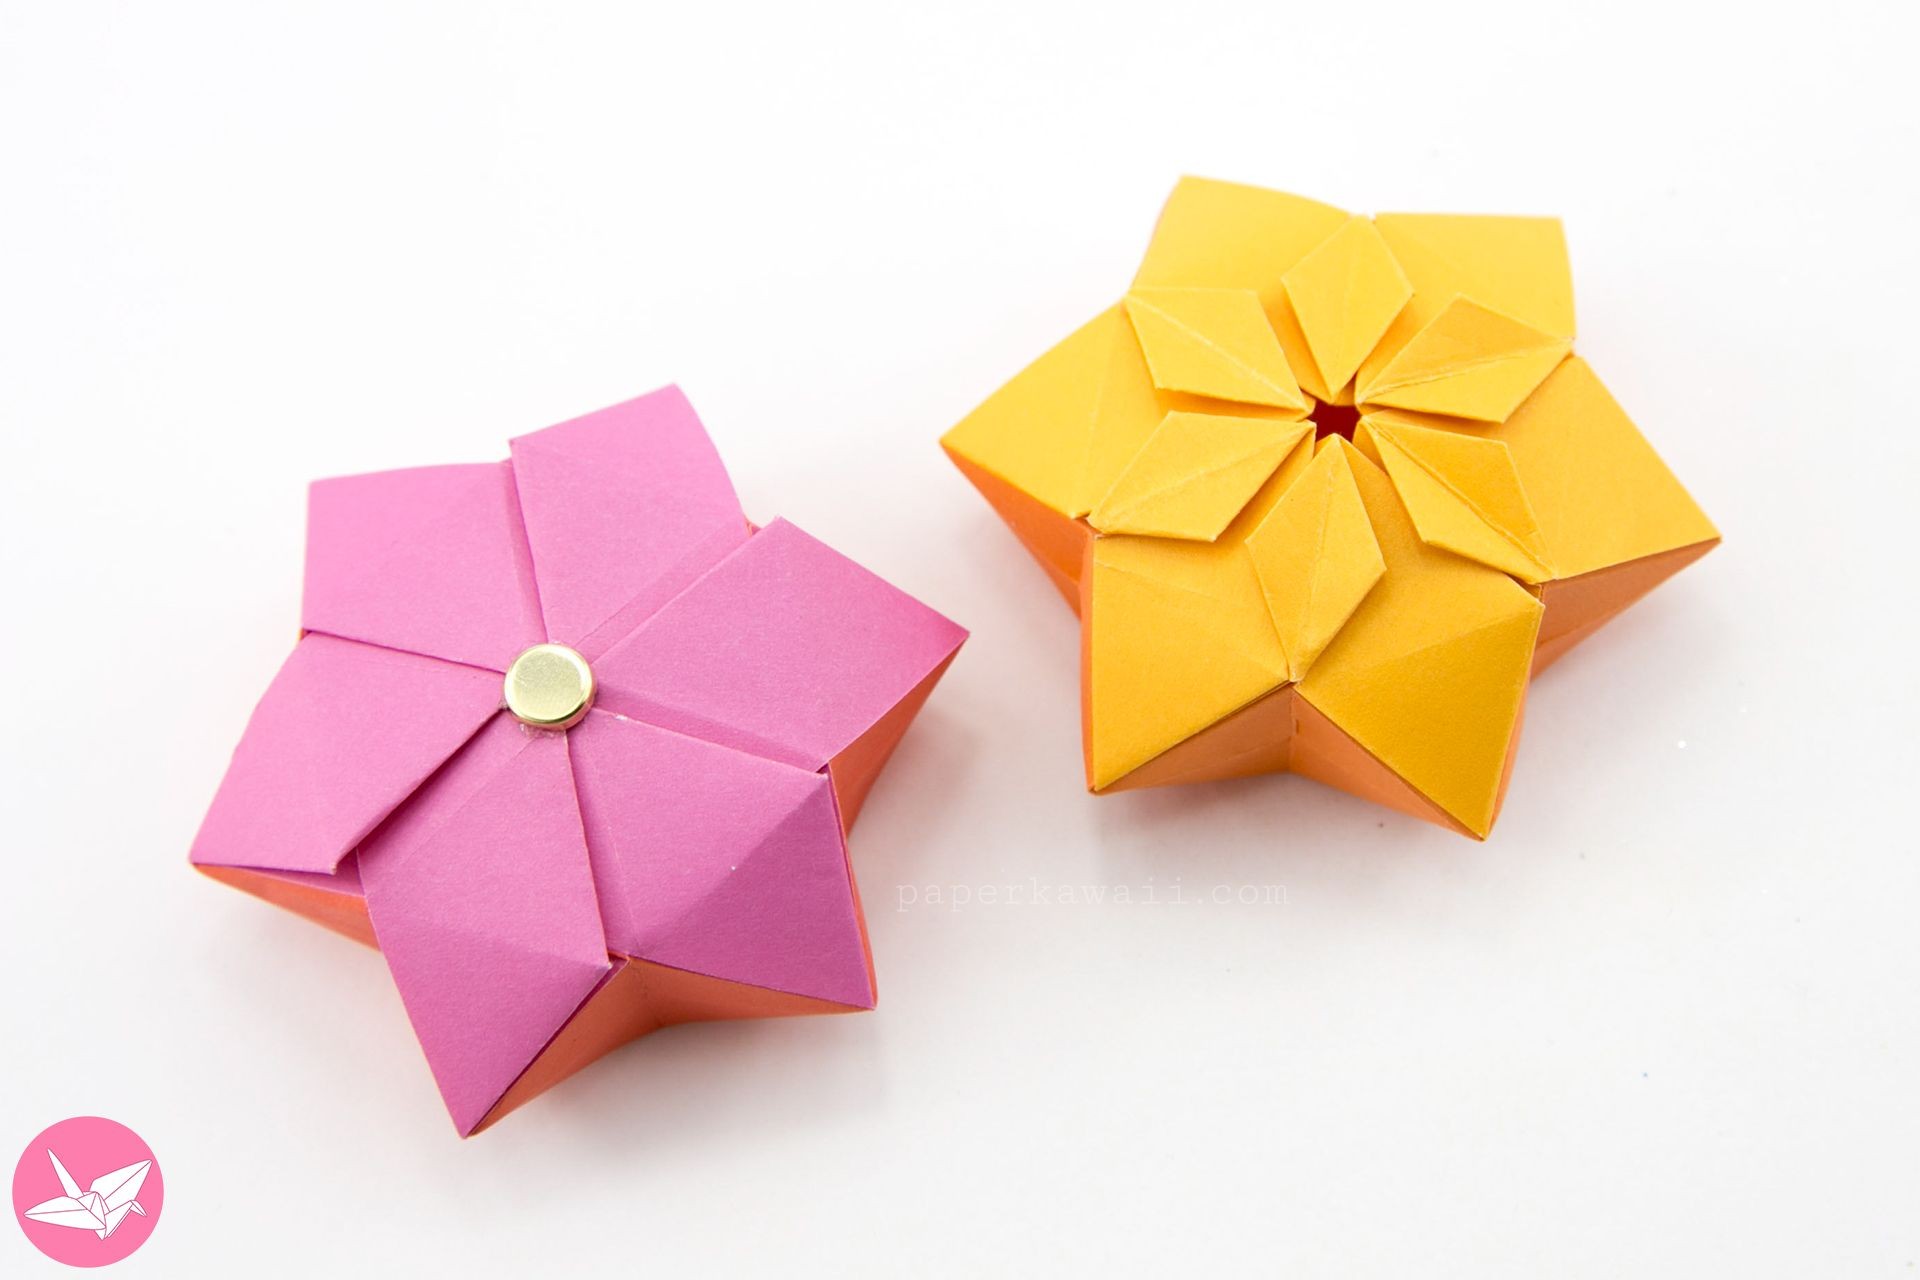 Papercraft origami Flowers origami Hexagonal Puffy Star Tutorial